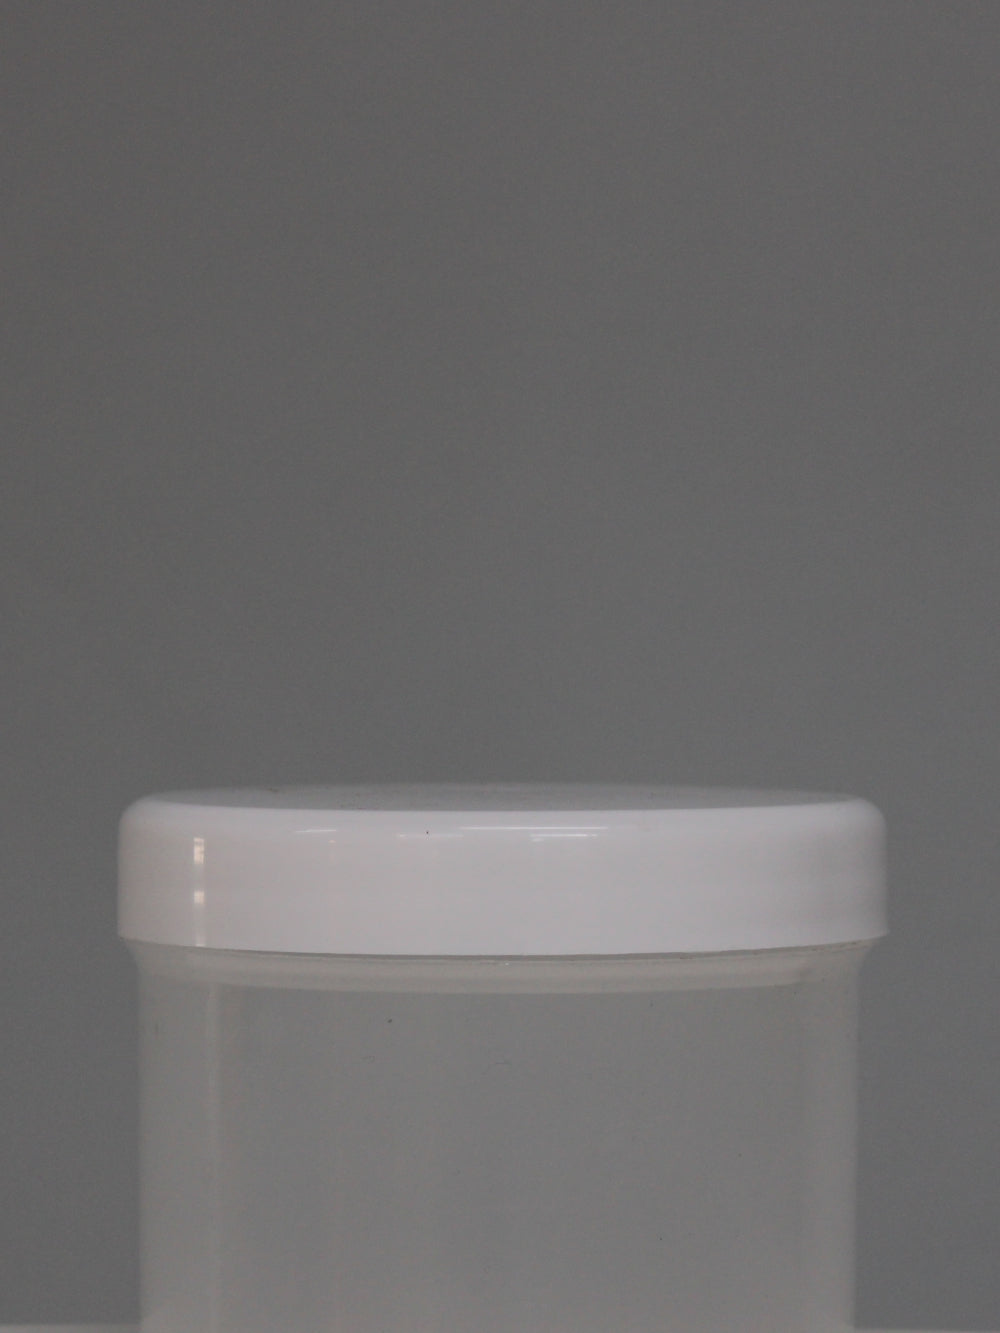 175ml Rome Cosmetic Jar - (Pack of 100 units)